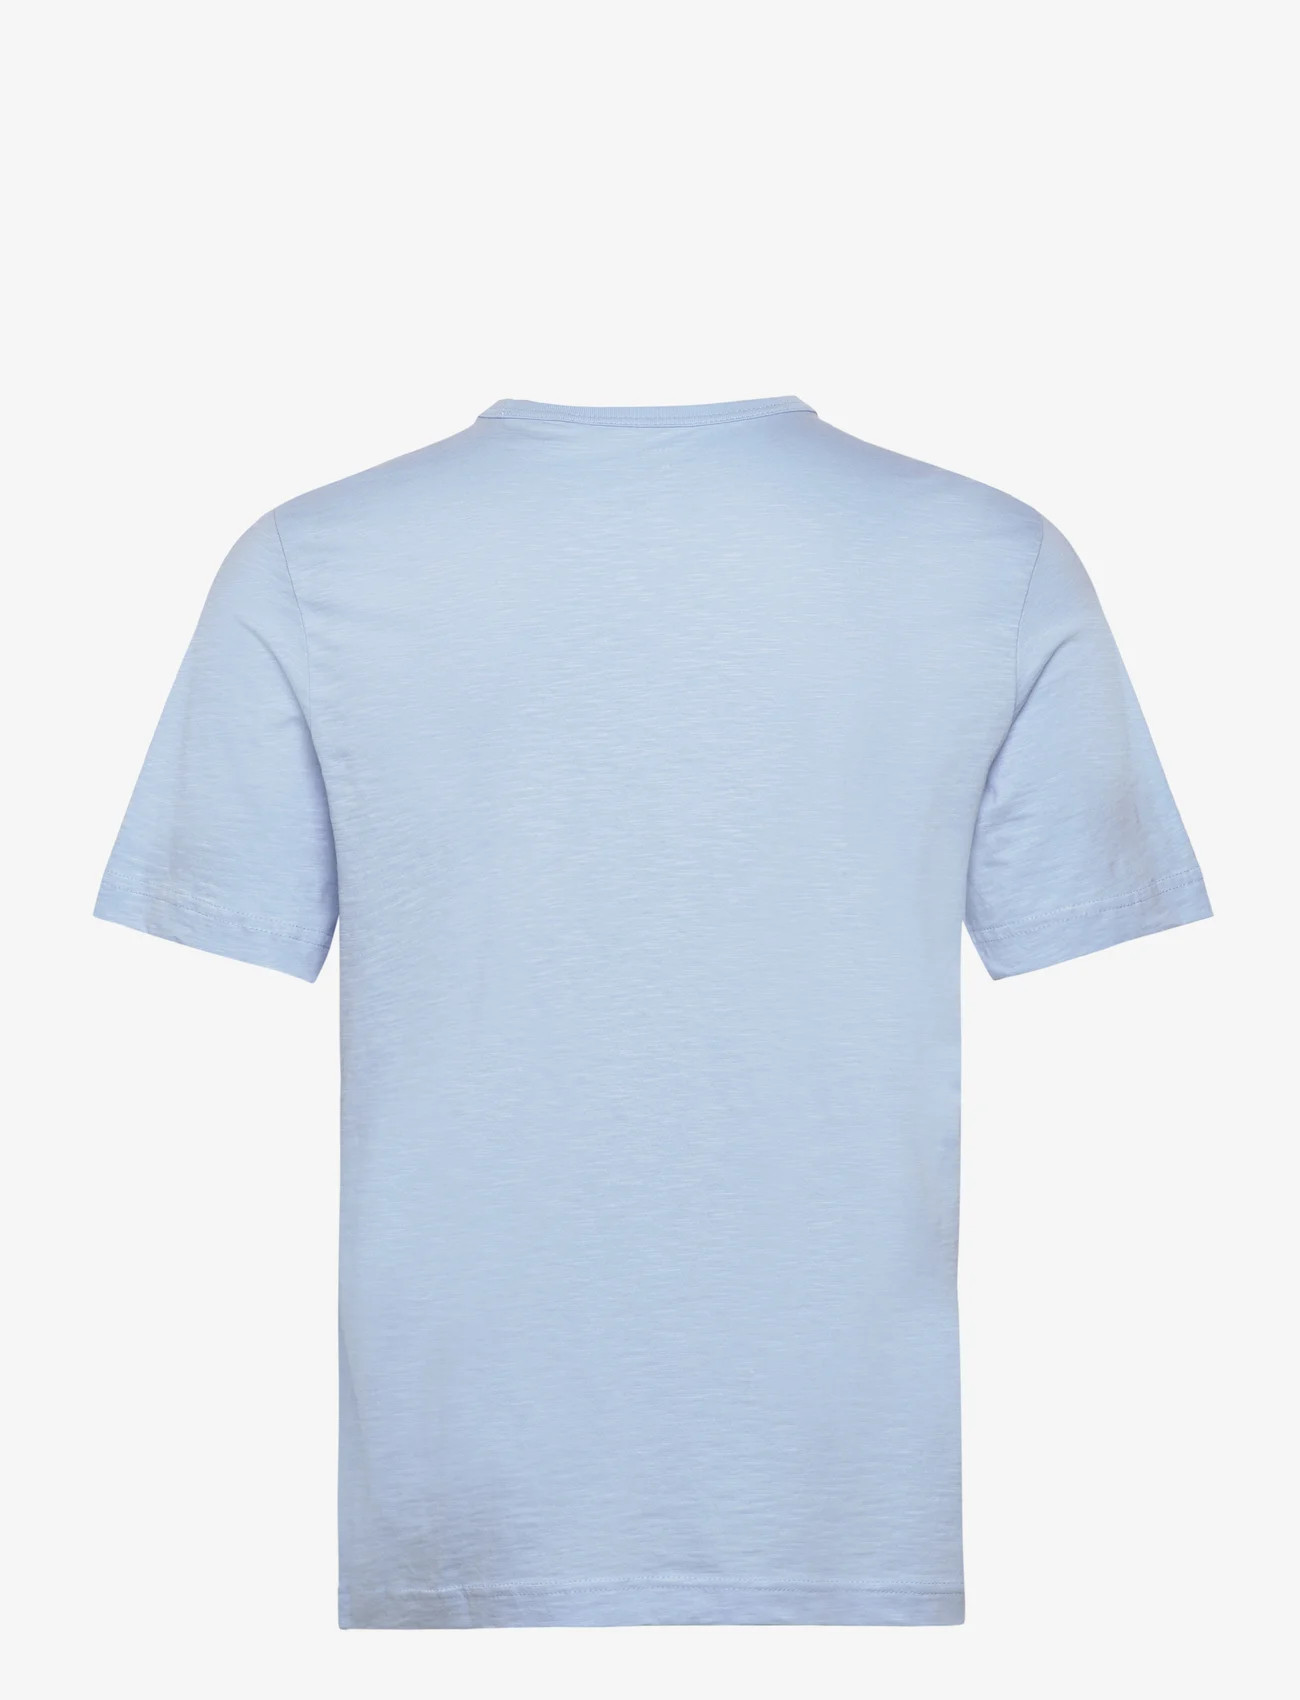 Tom Tailor - printed t-shirt - de laveste prisene - washed out middle blue - 1